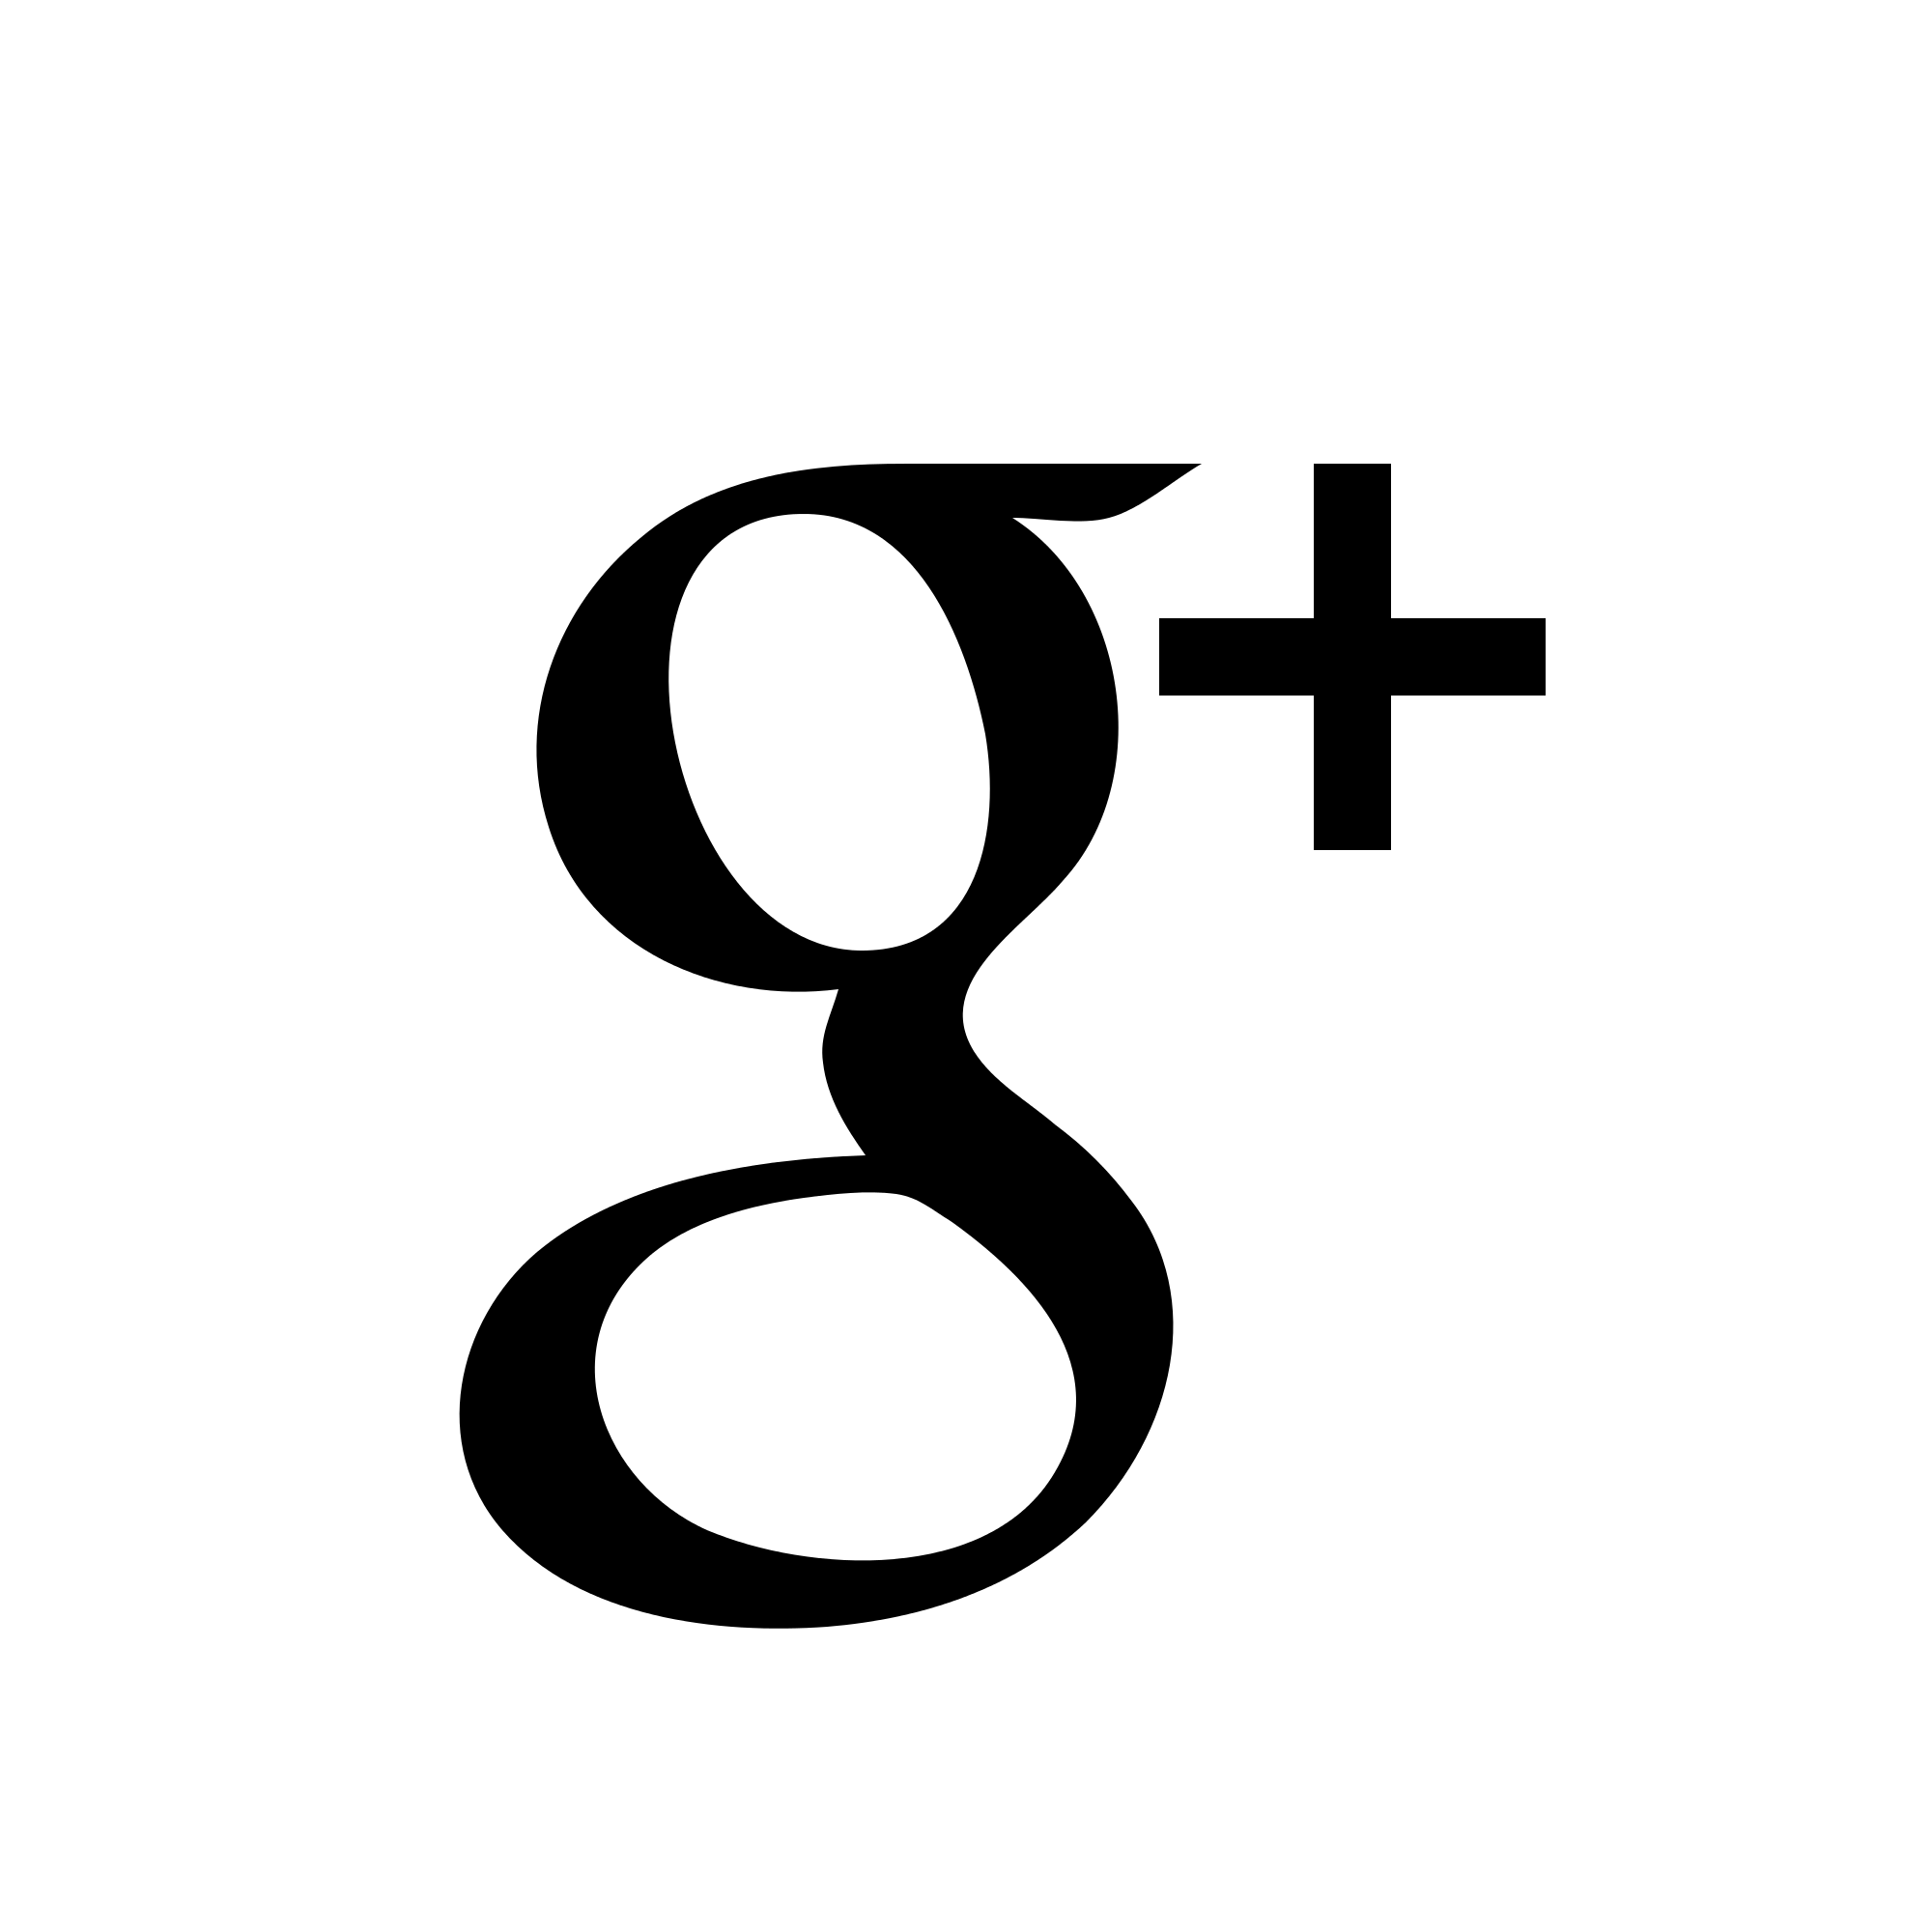 White Google Plus Logo - Black And White Google Logo Png Image